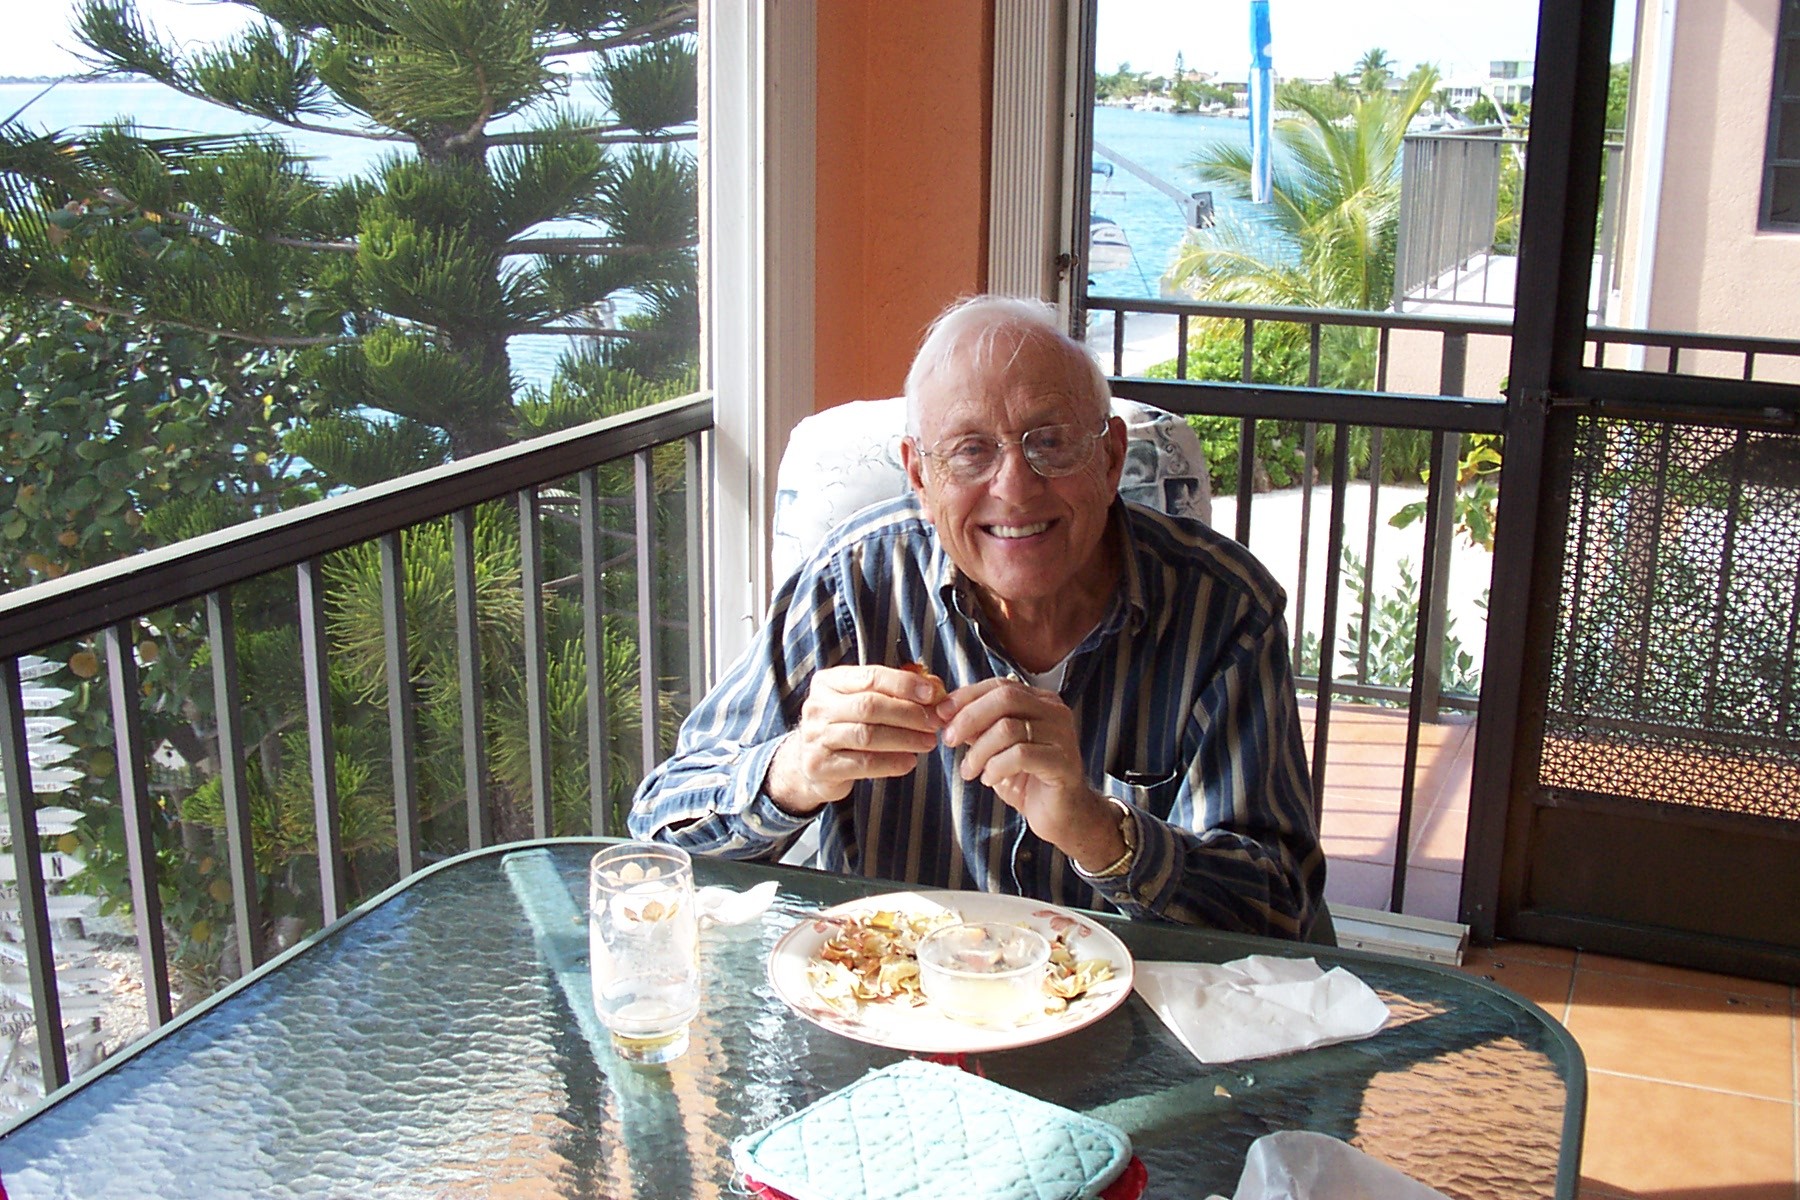 HENRY RODAHAVER EATING STONE CRAB CLAWS